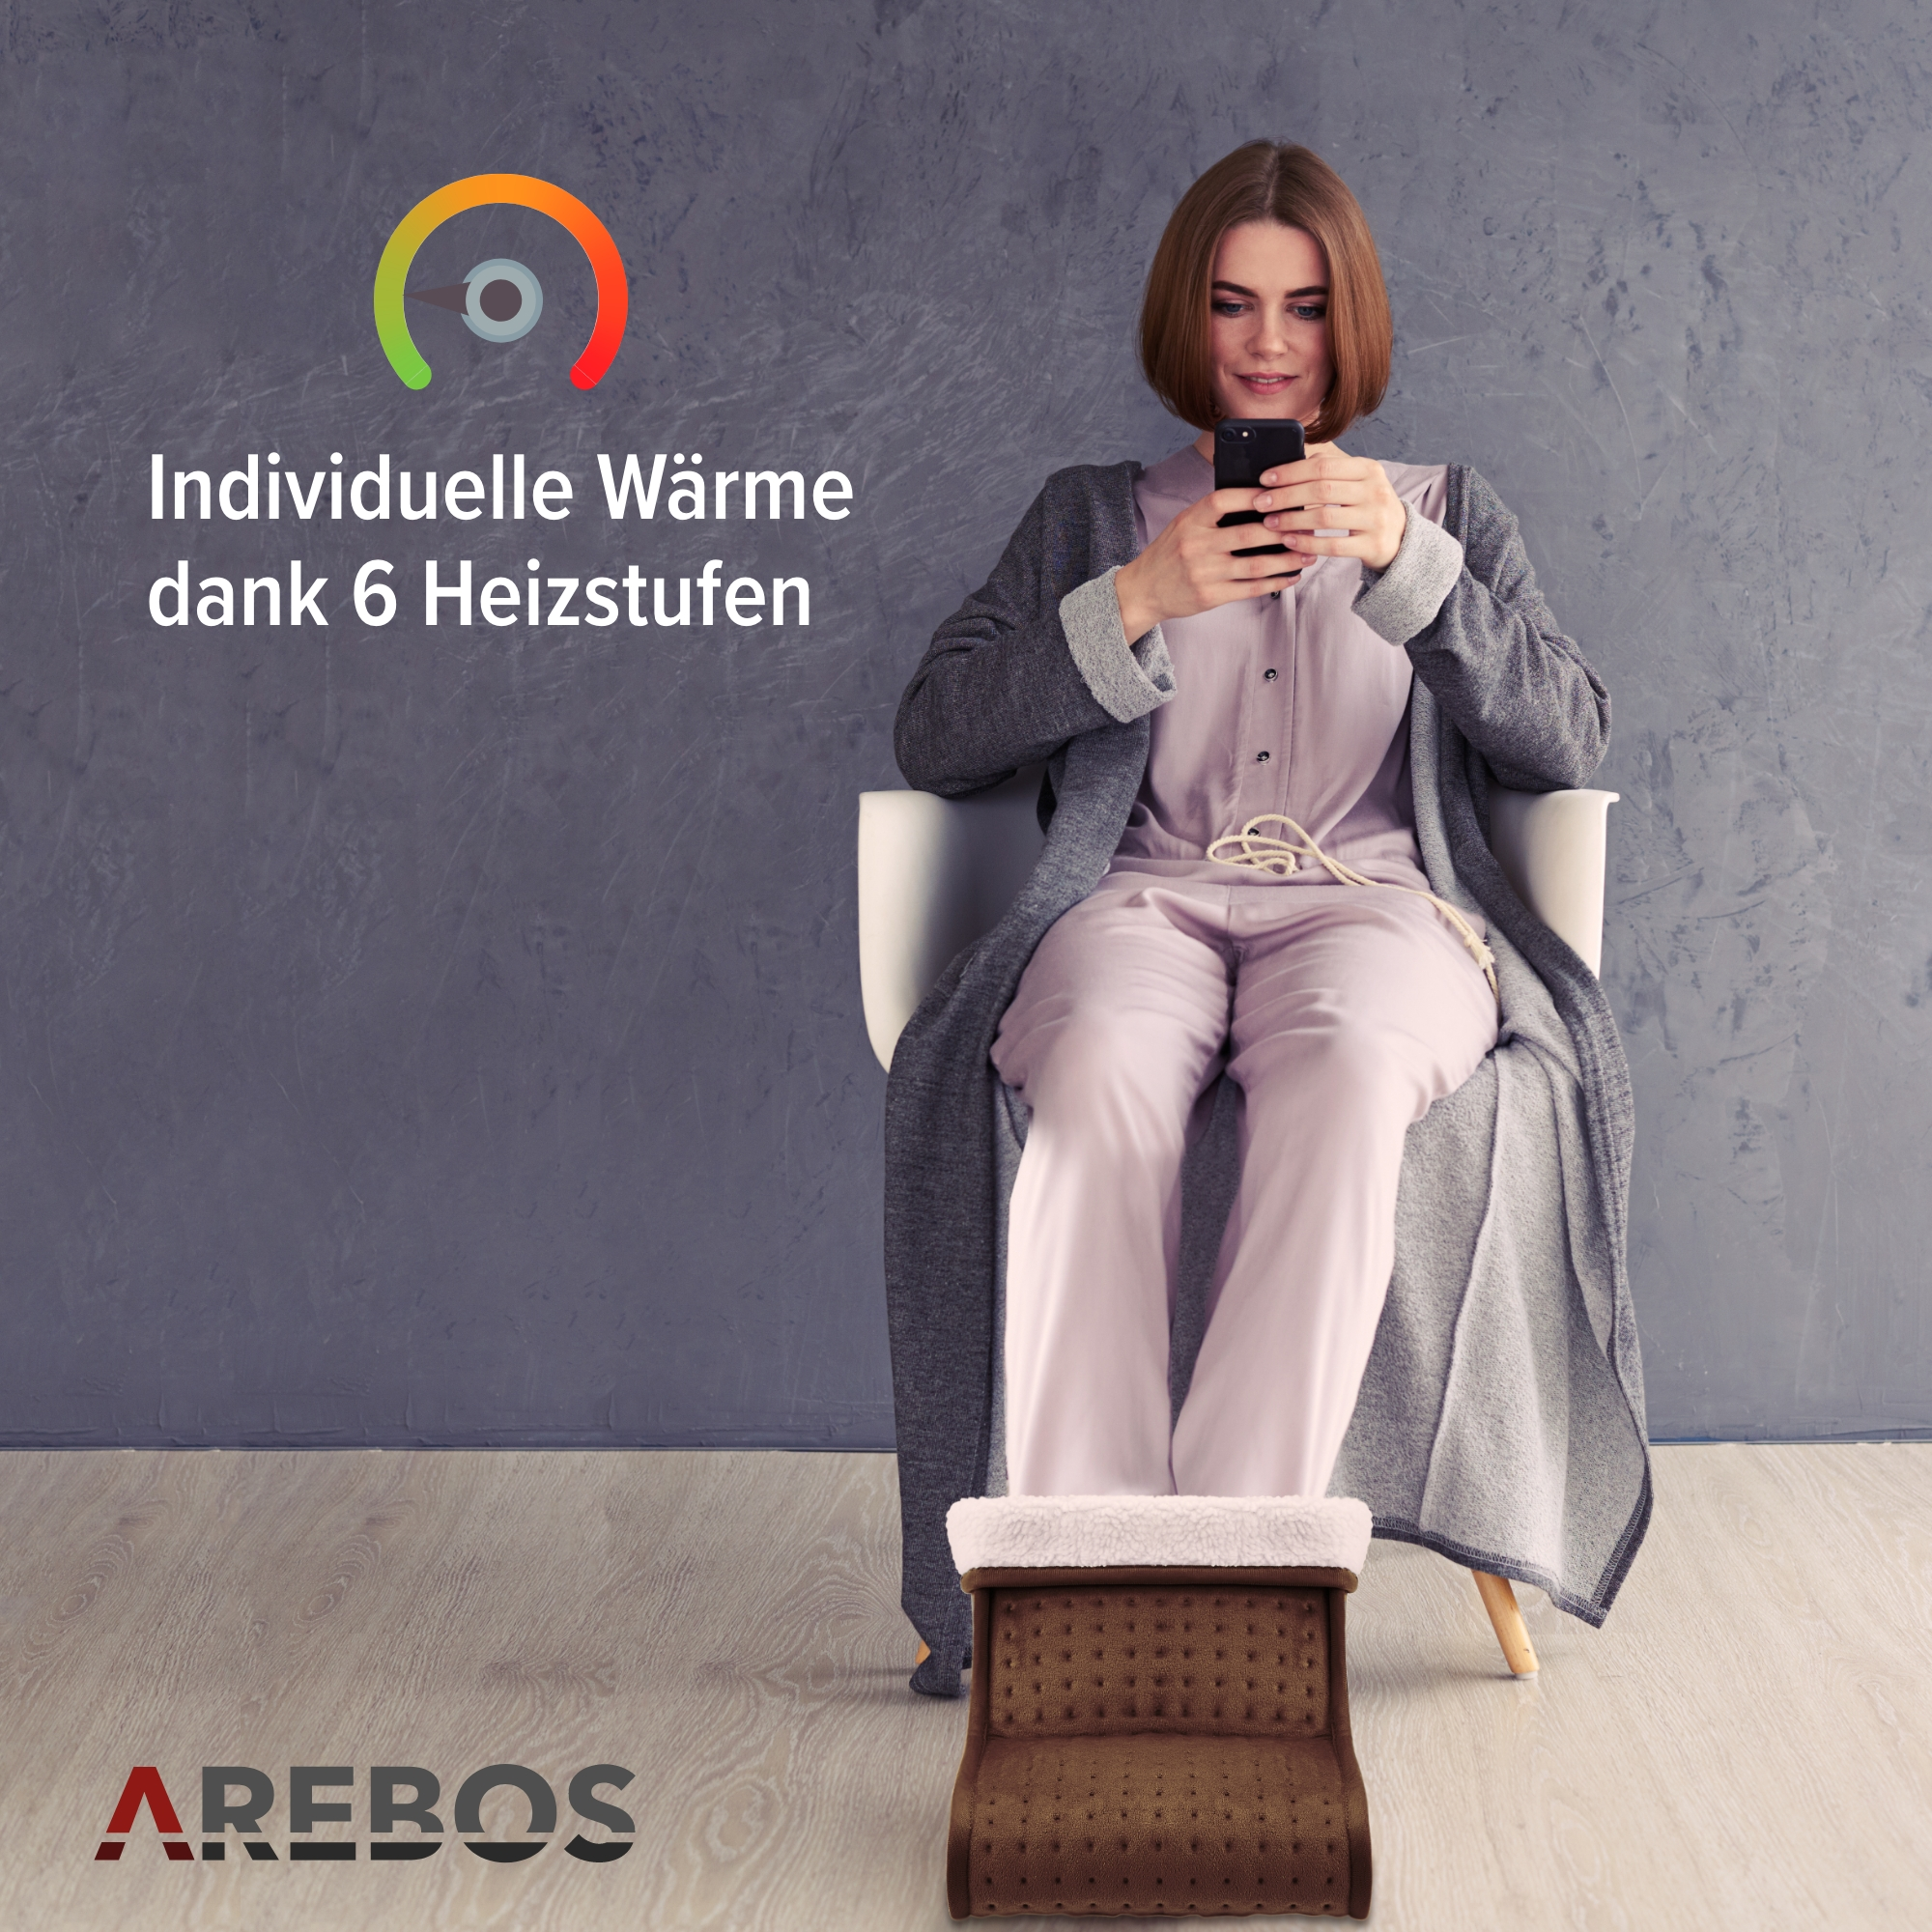 AREBOS Abschaltautomatik & Überhitzungsschutz | Fernbedienung inkl. LED - Fußwärmer